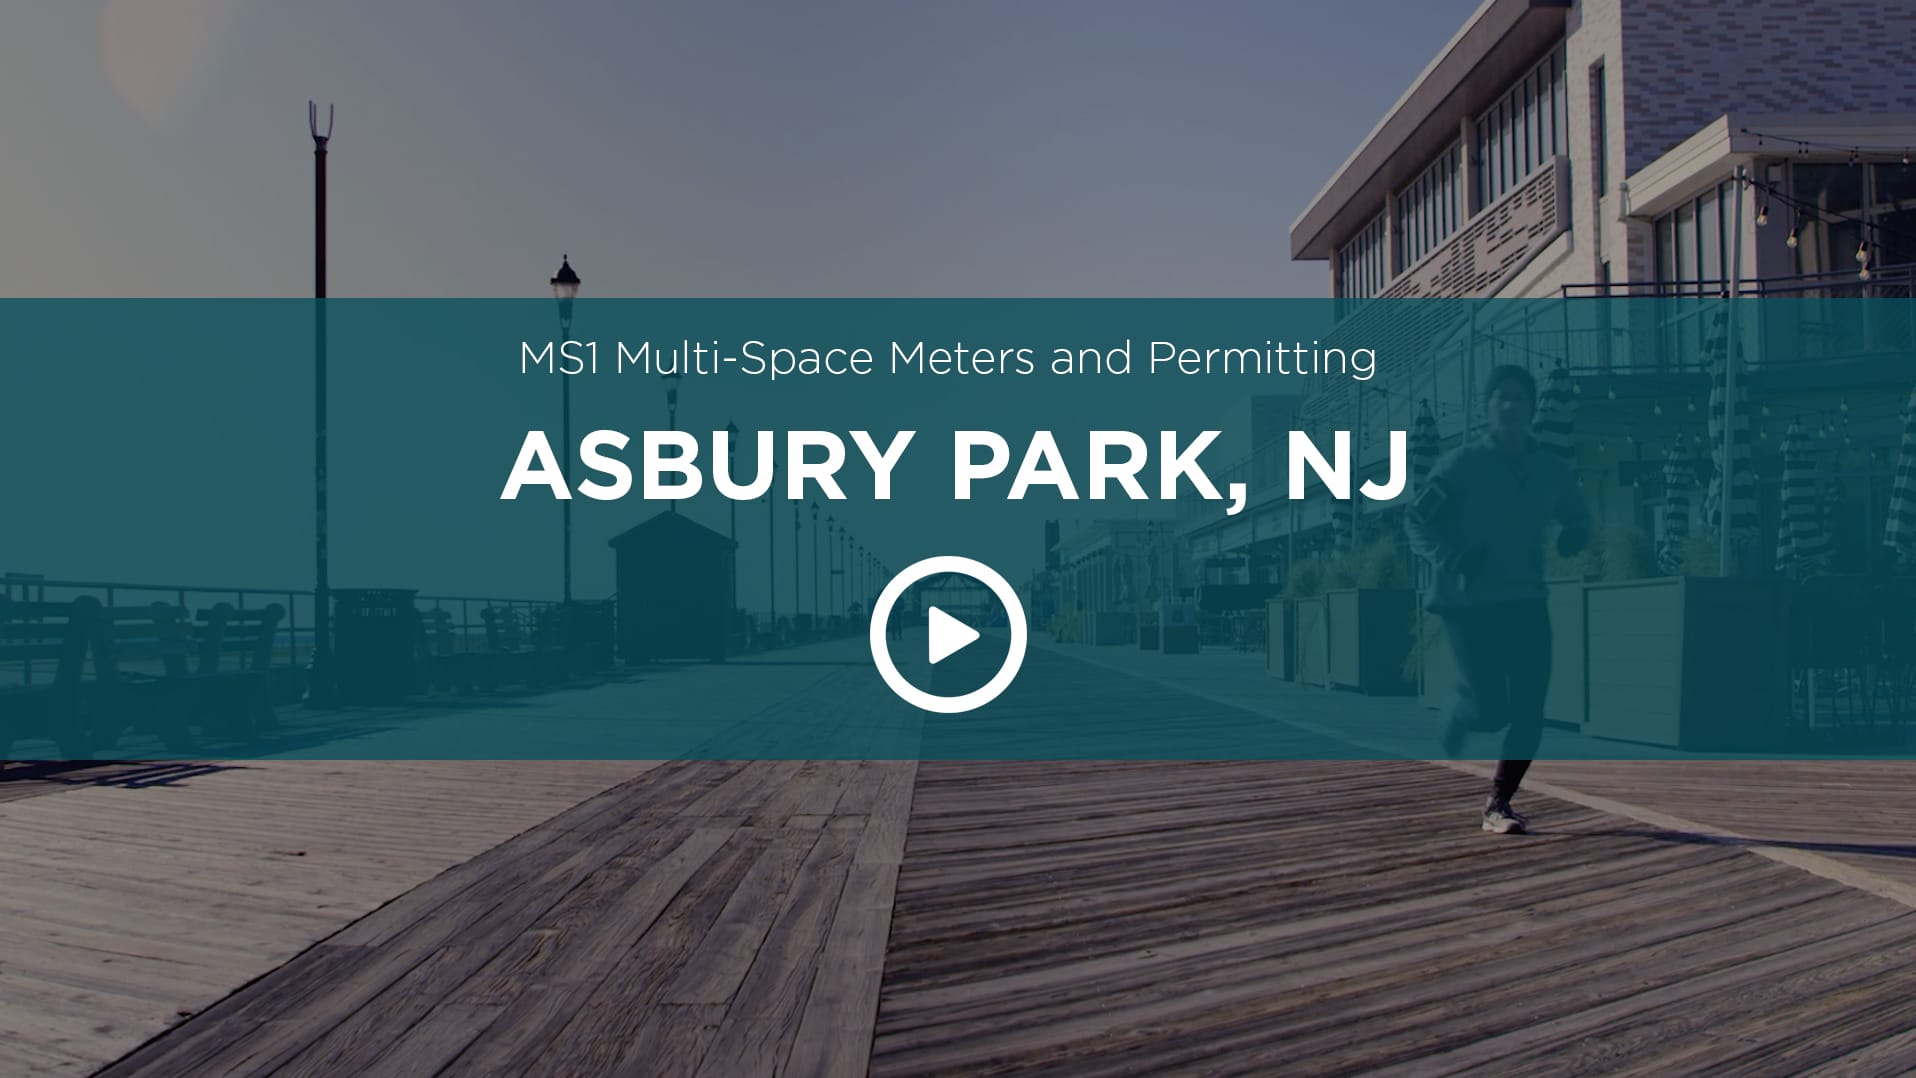 Asbury Park NJ Case Study Video